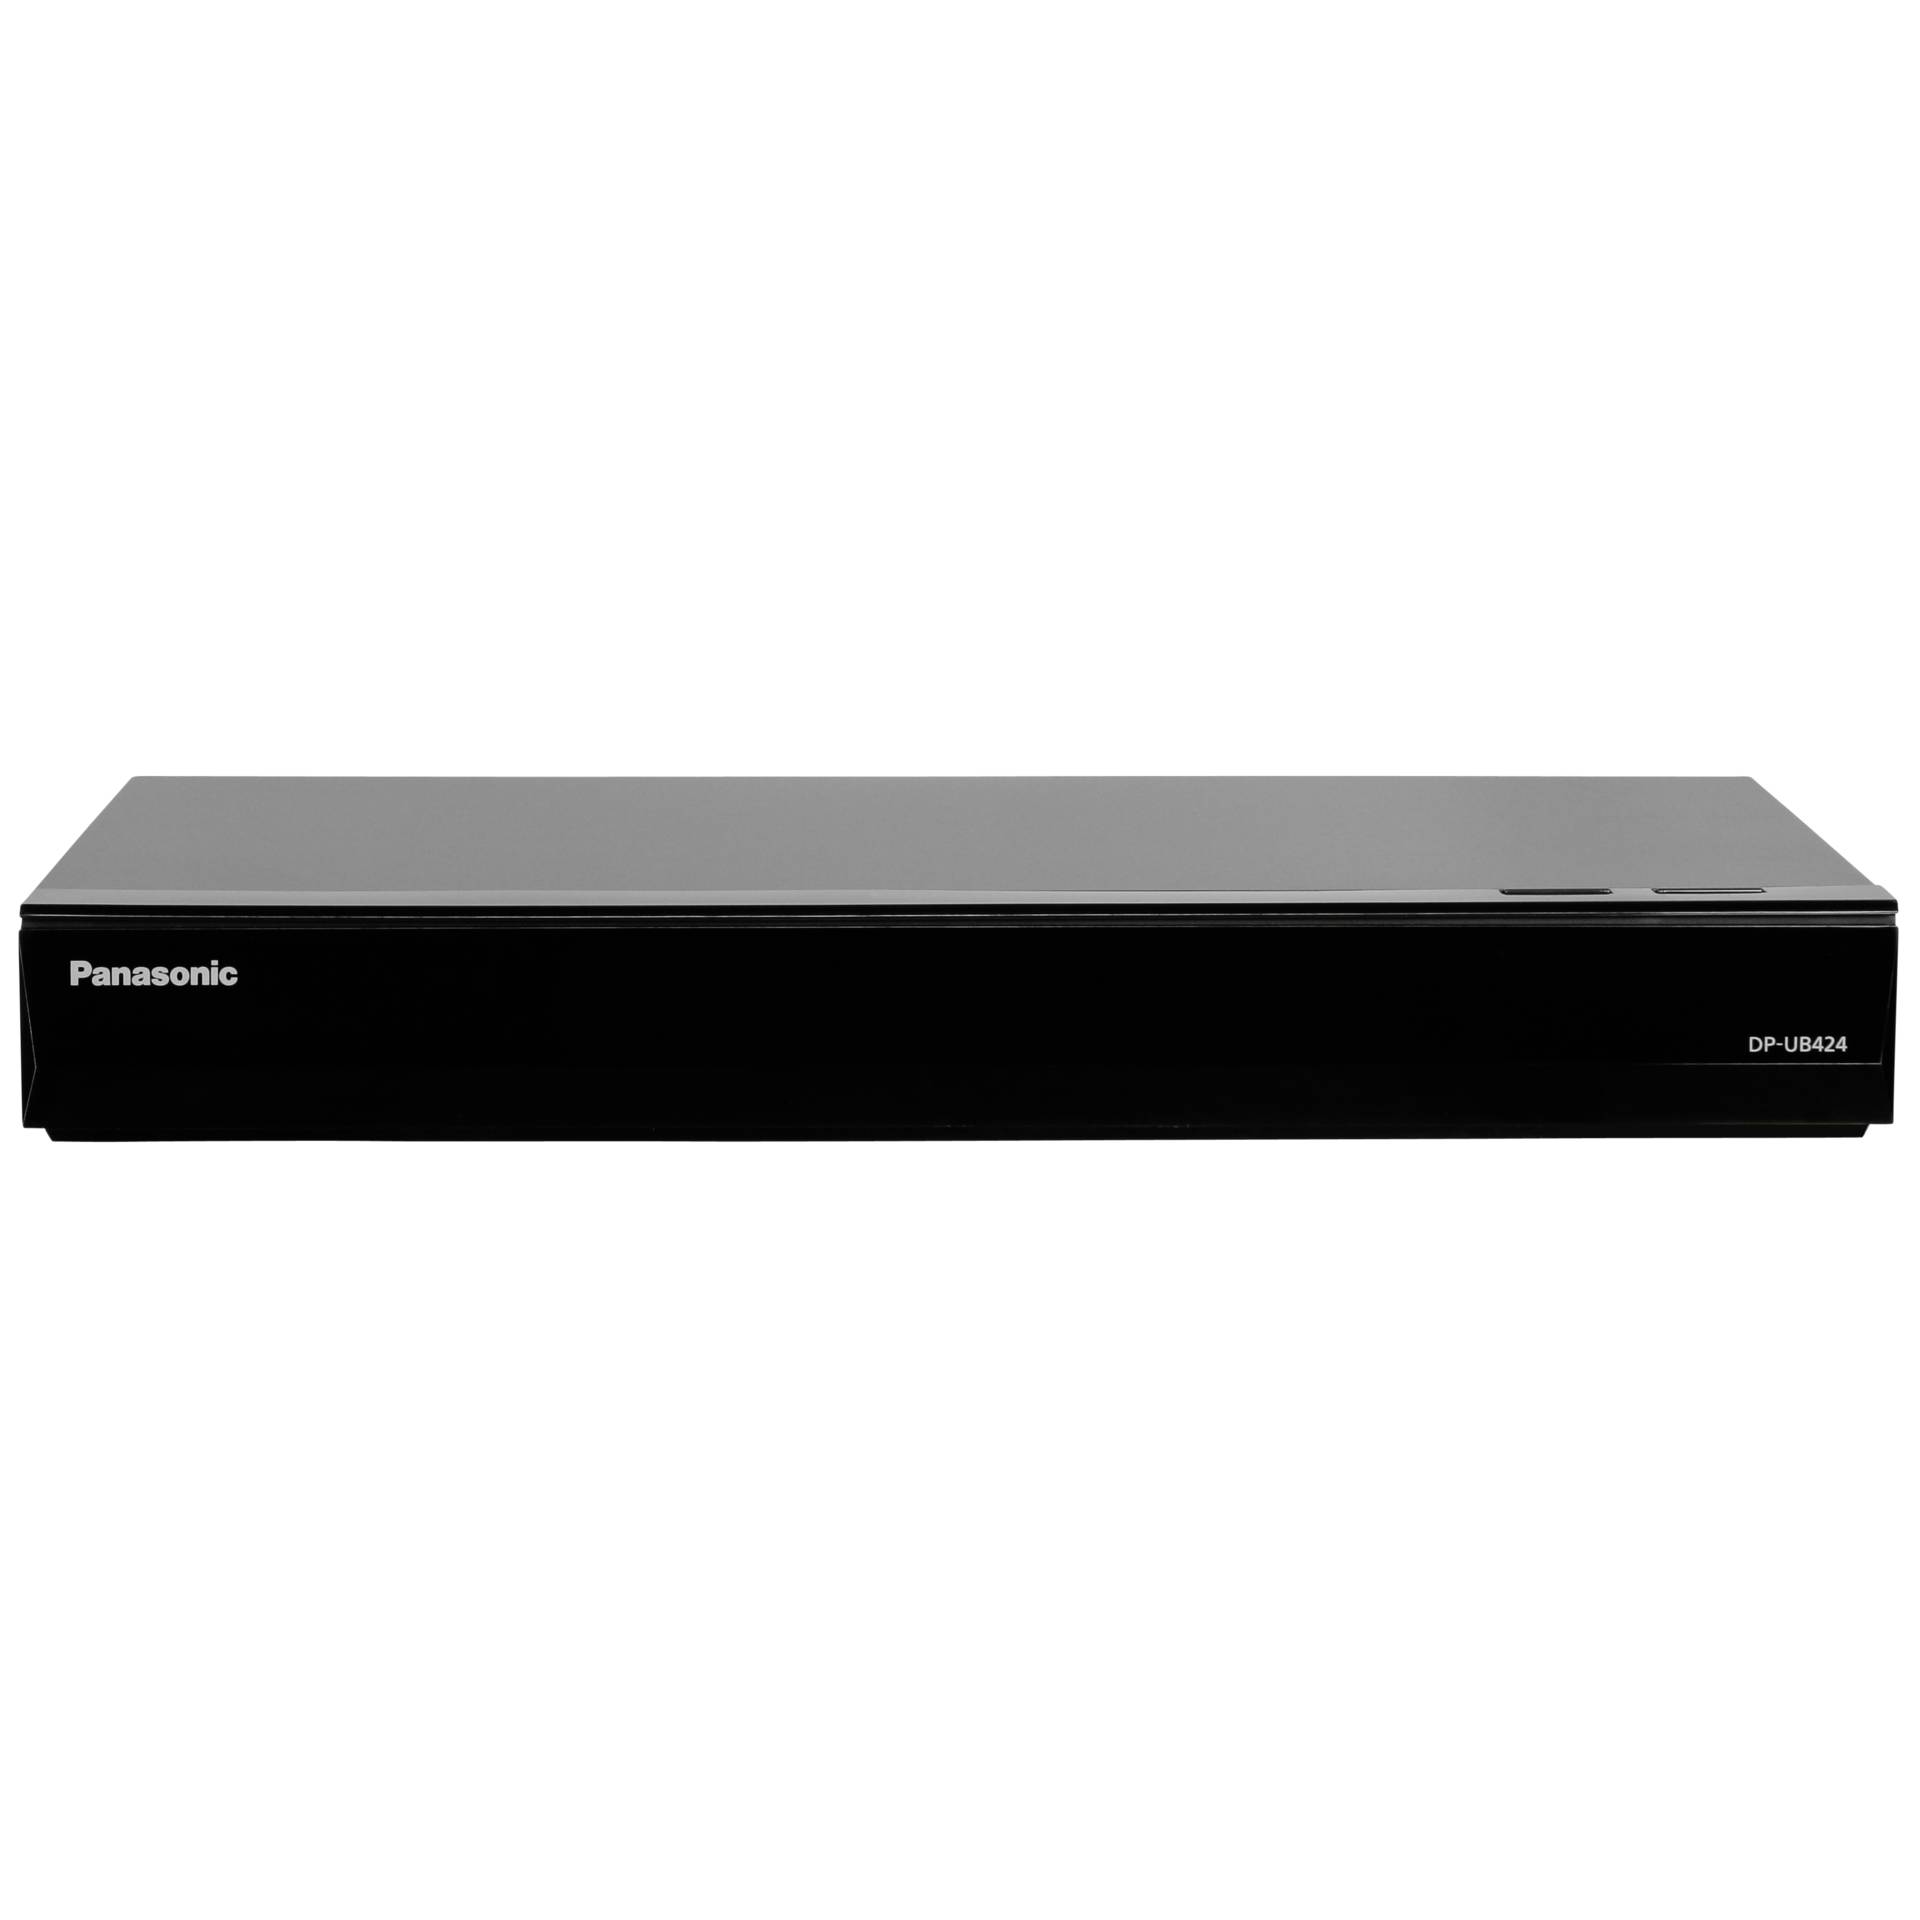 Panasonic DP-UB424 4K Ultra HD Blu-ray-Player schwarz 4K-Upscaling, Ultra HD Premium, HDR, HDR10, HDR10+, HLG